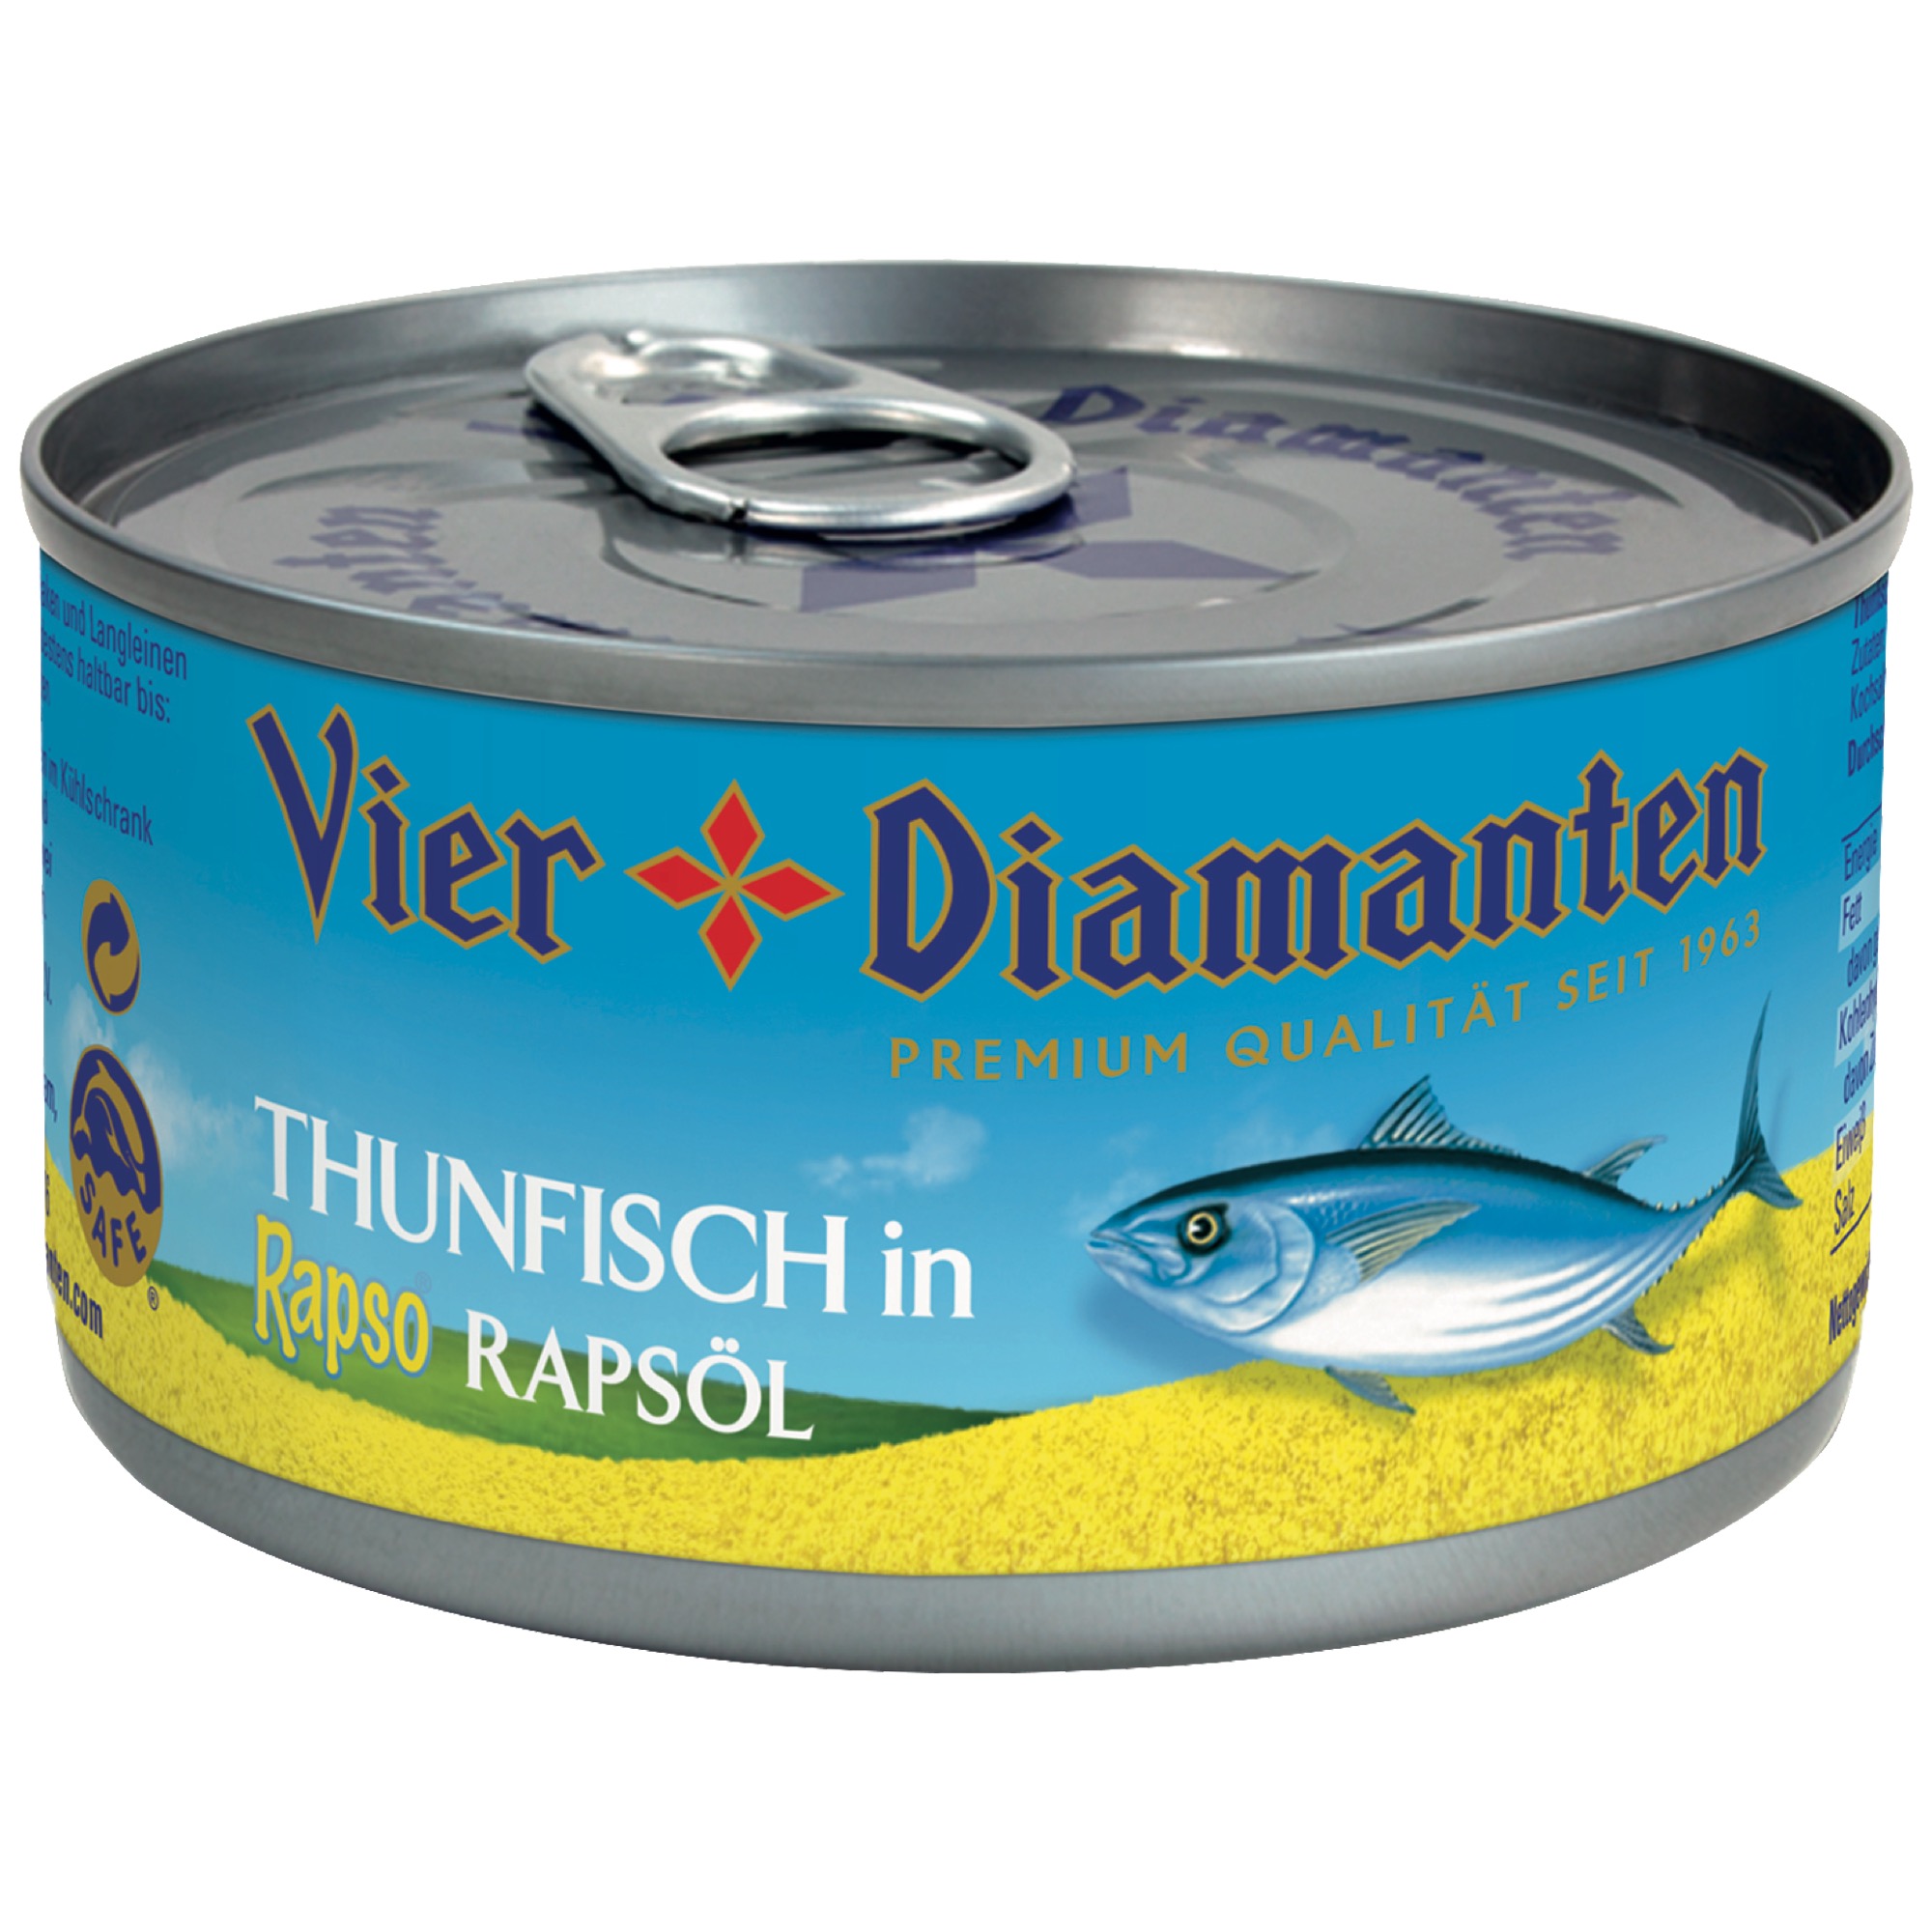 4 Diamant tuniak v repkovom oleji 195g